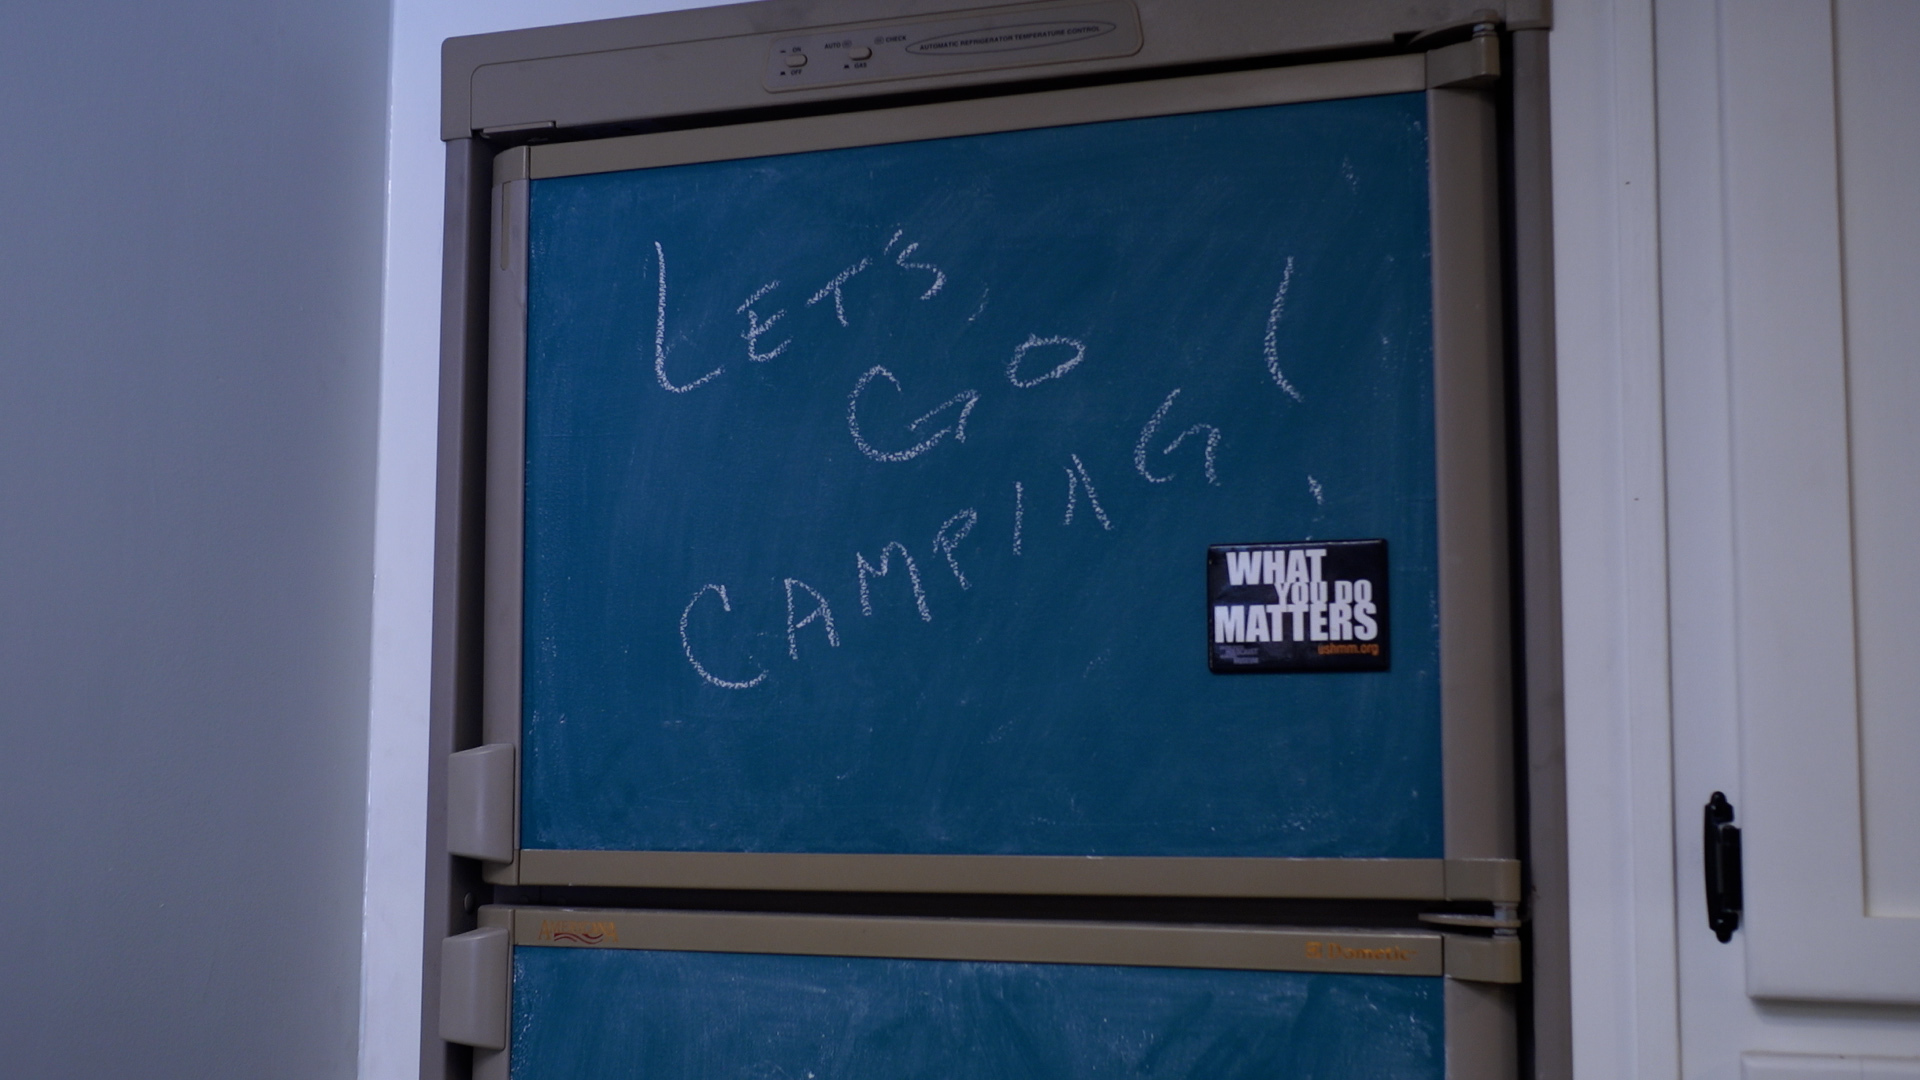 Let's go camping written on a chalkboard